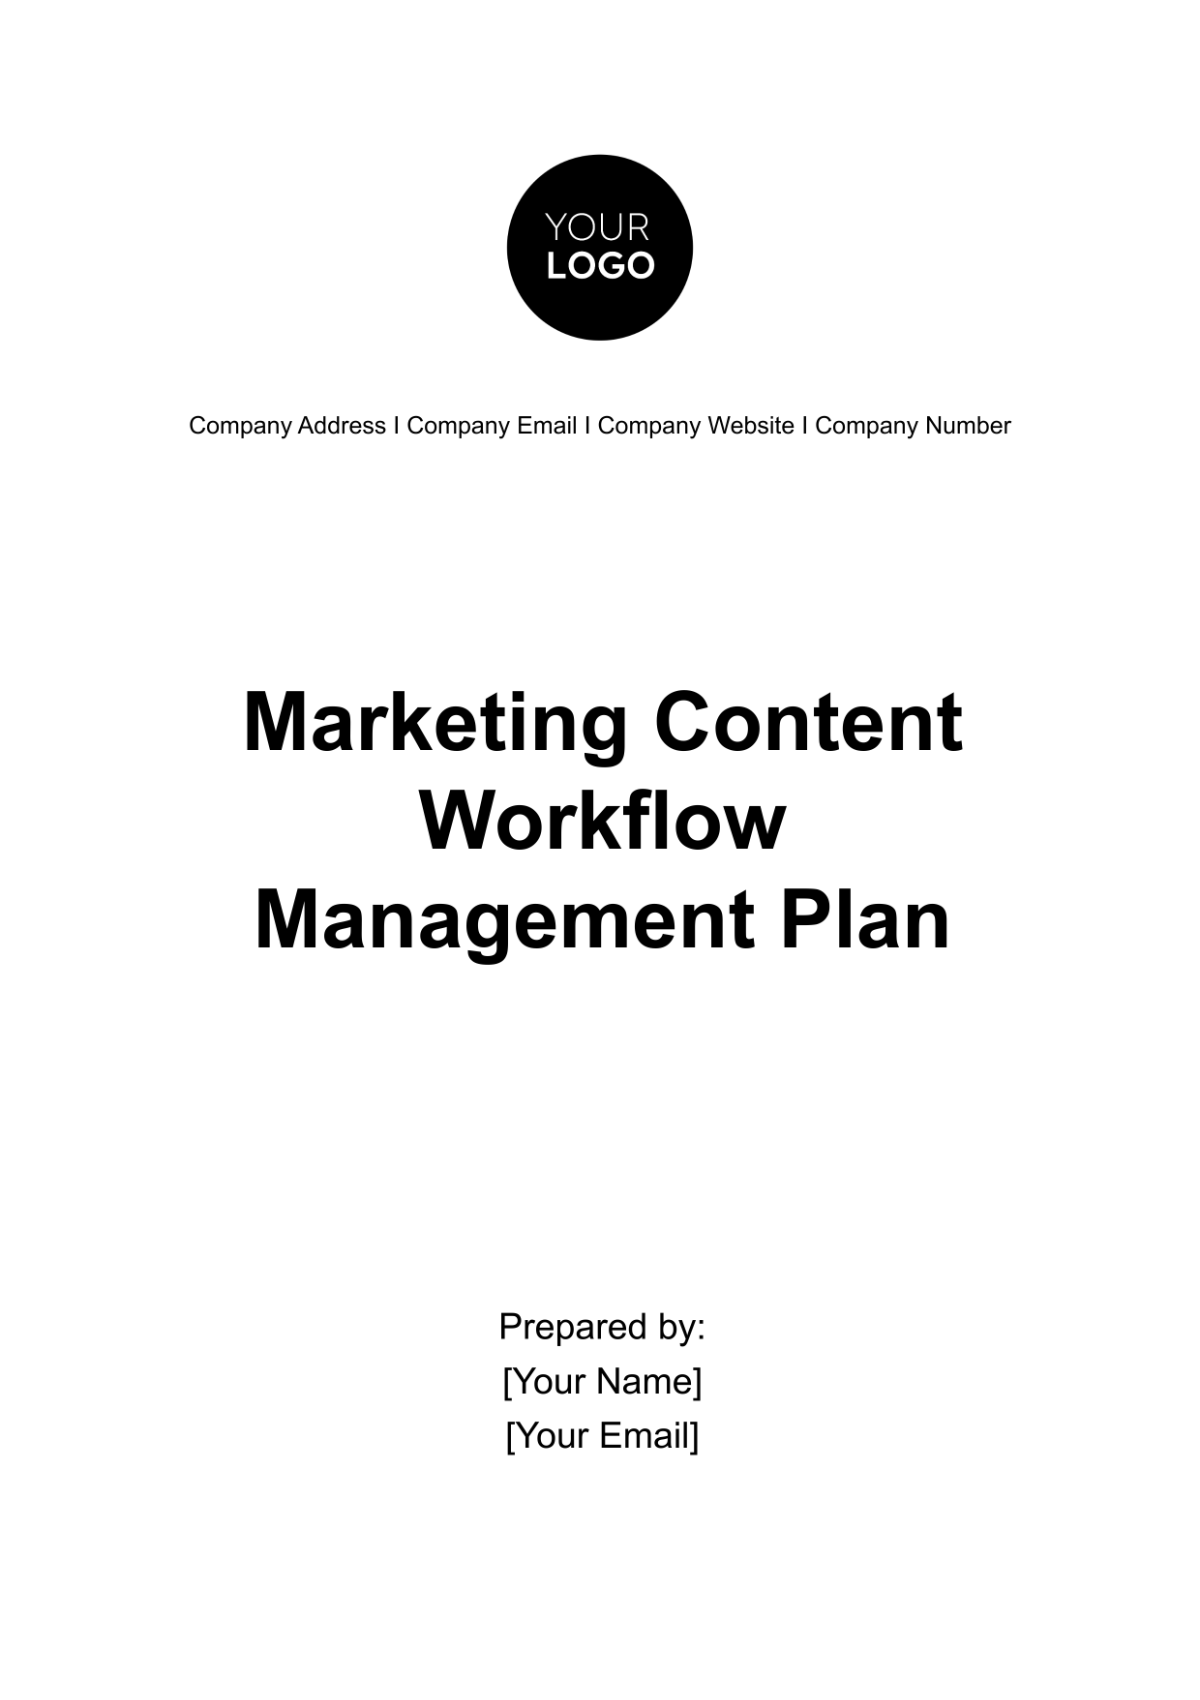 Free Marketing Content Workflow Management Plan Template